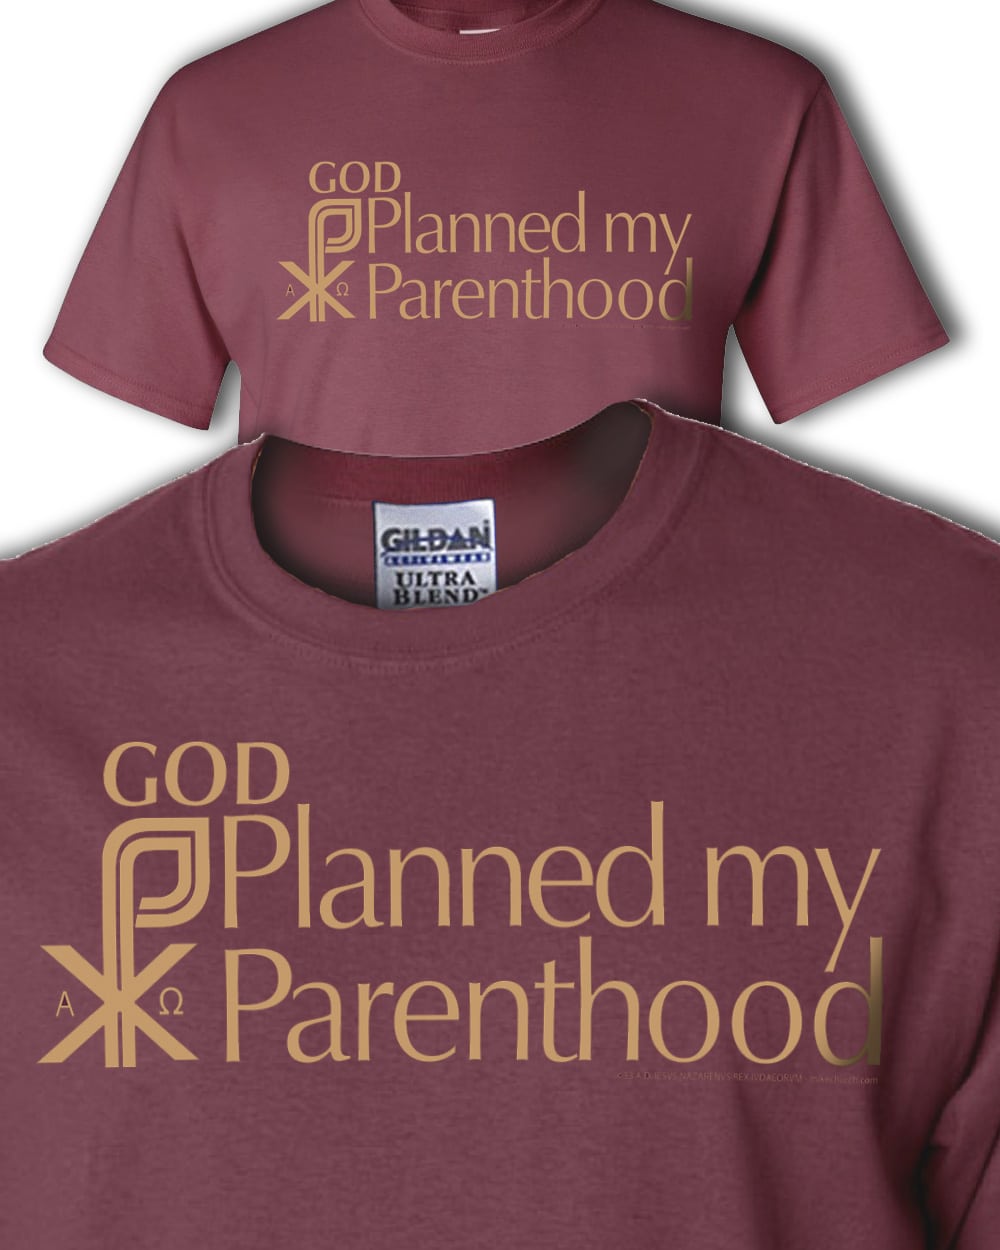 God planned my parenthood t-shirt